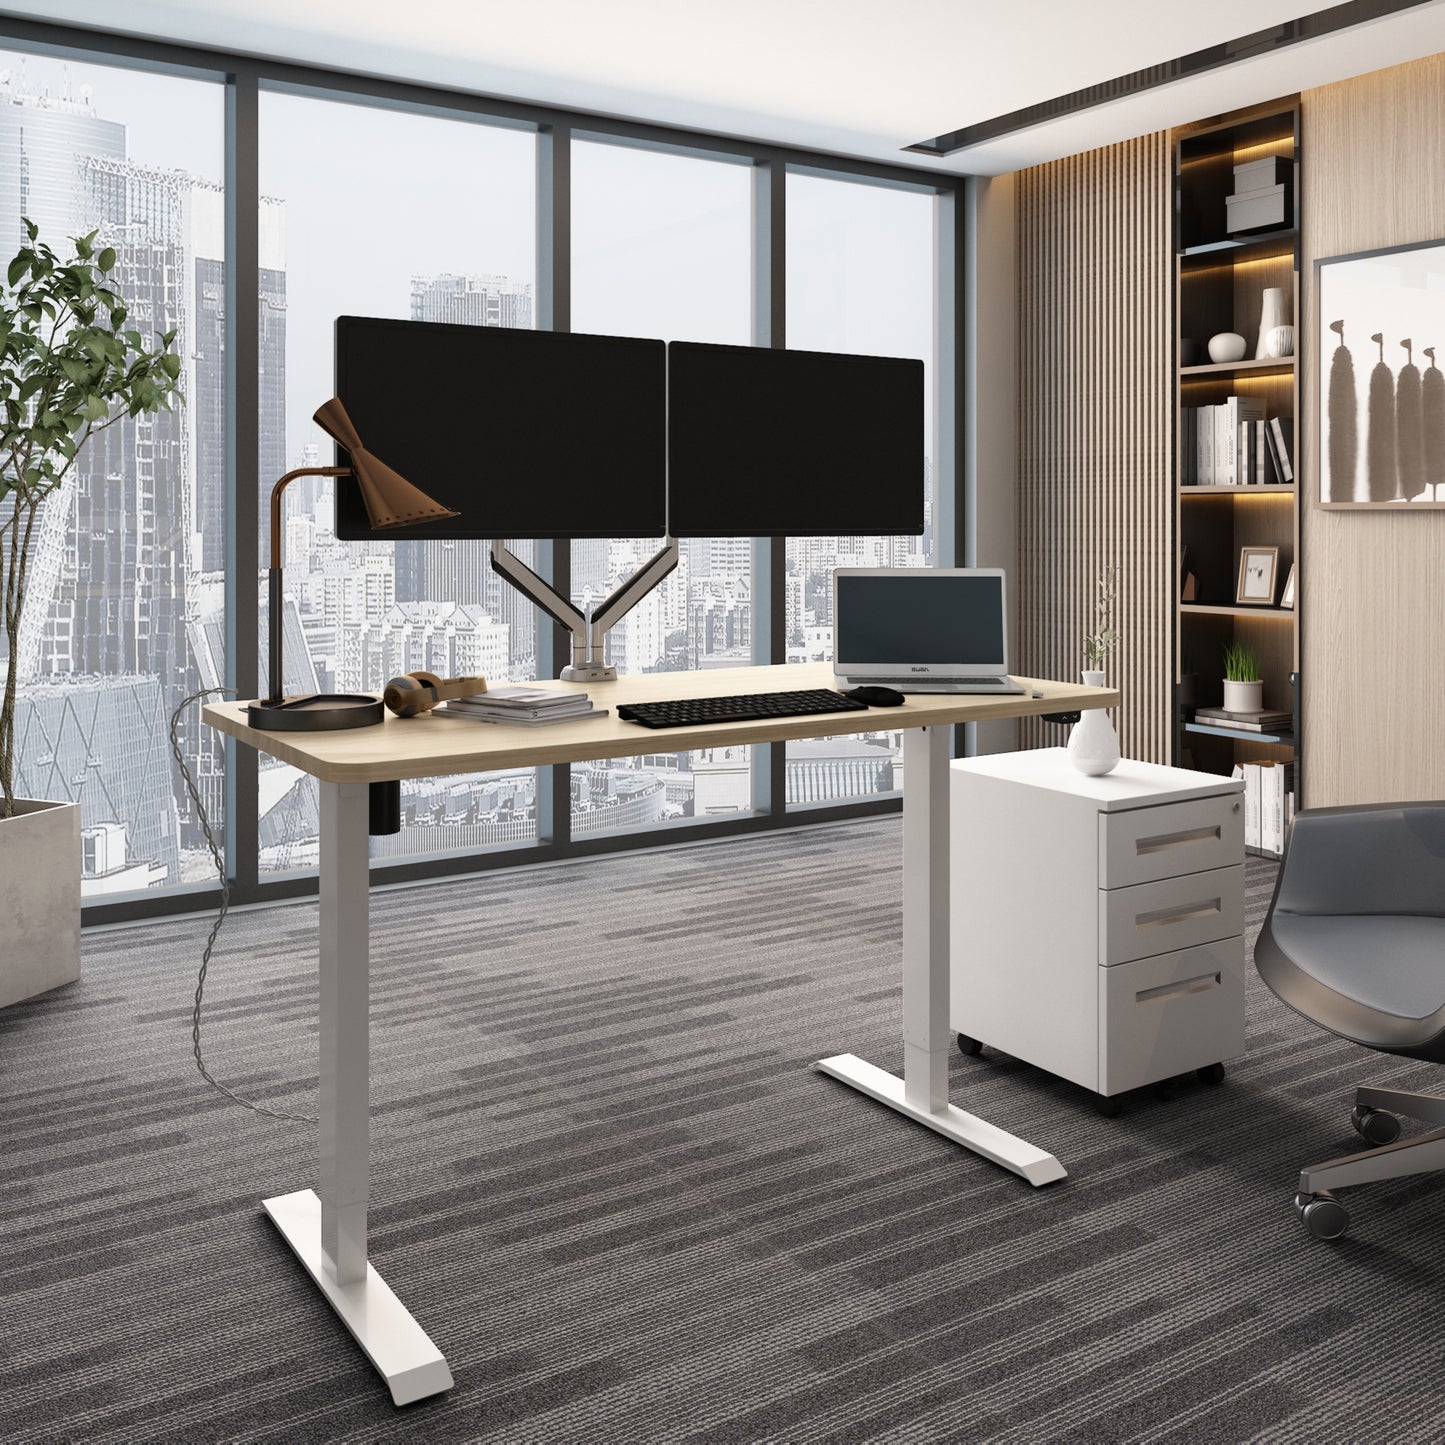 Heritage Basic Customisable Height Adjustable Desk